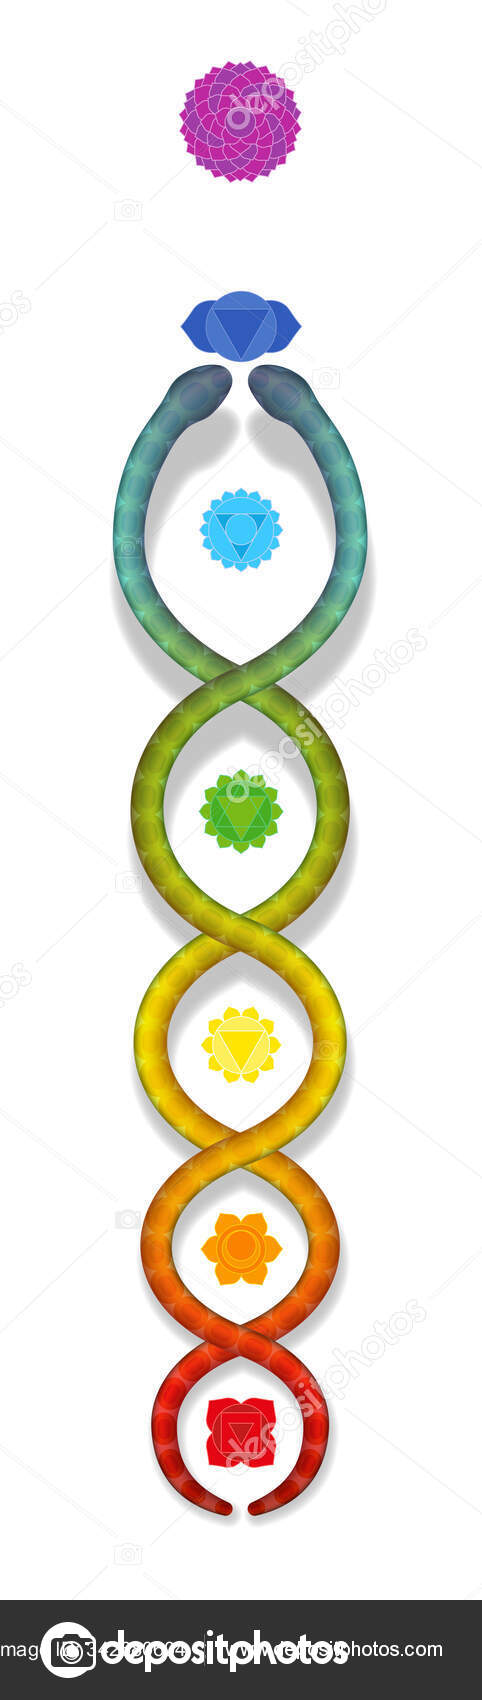 Kundalini serpente ascendente ao longo dos sete chakras principais